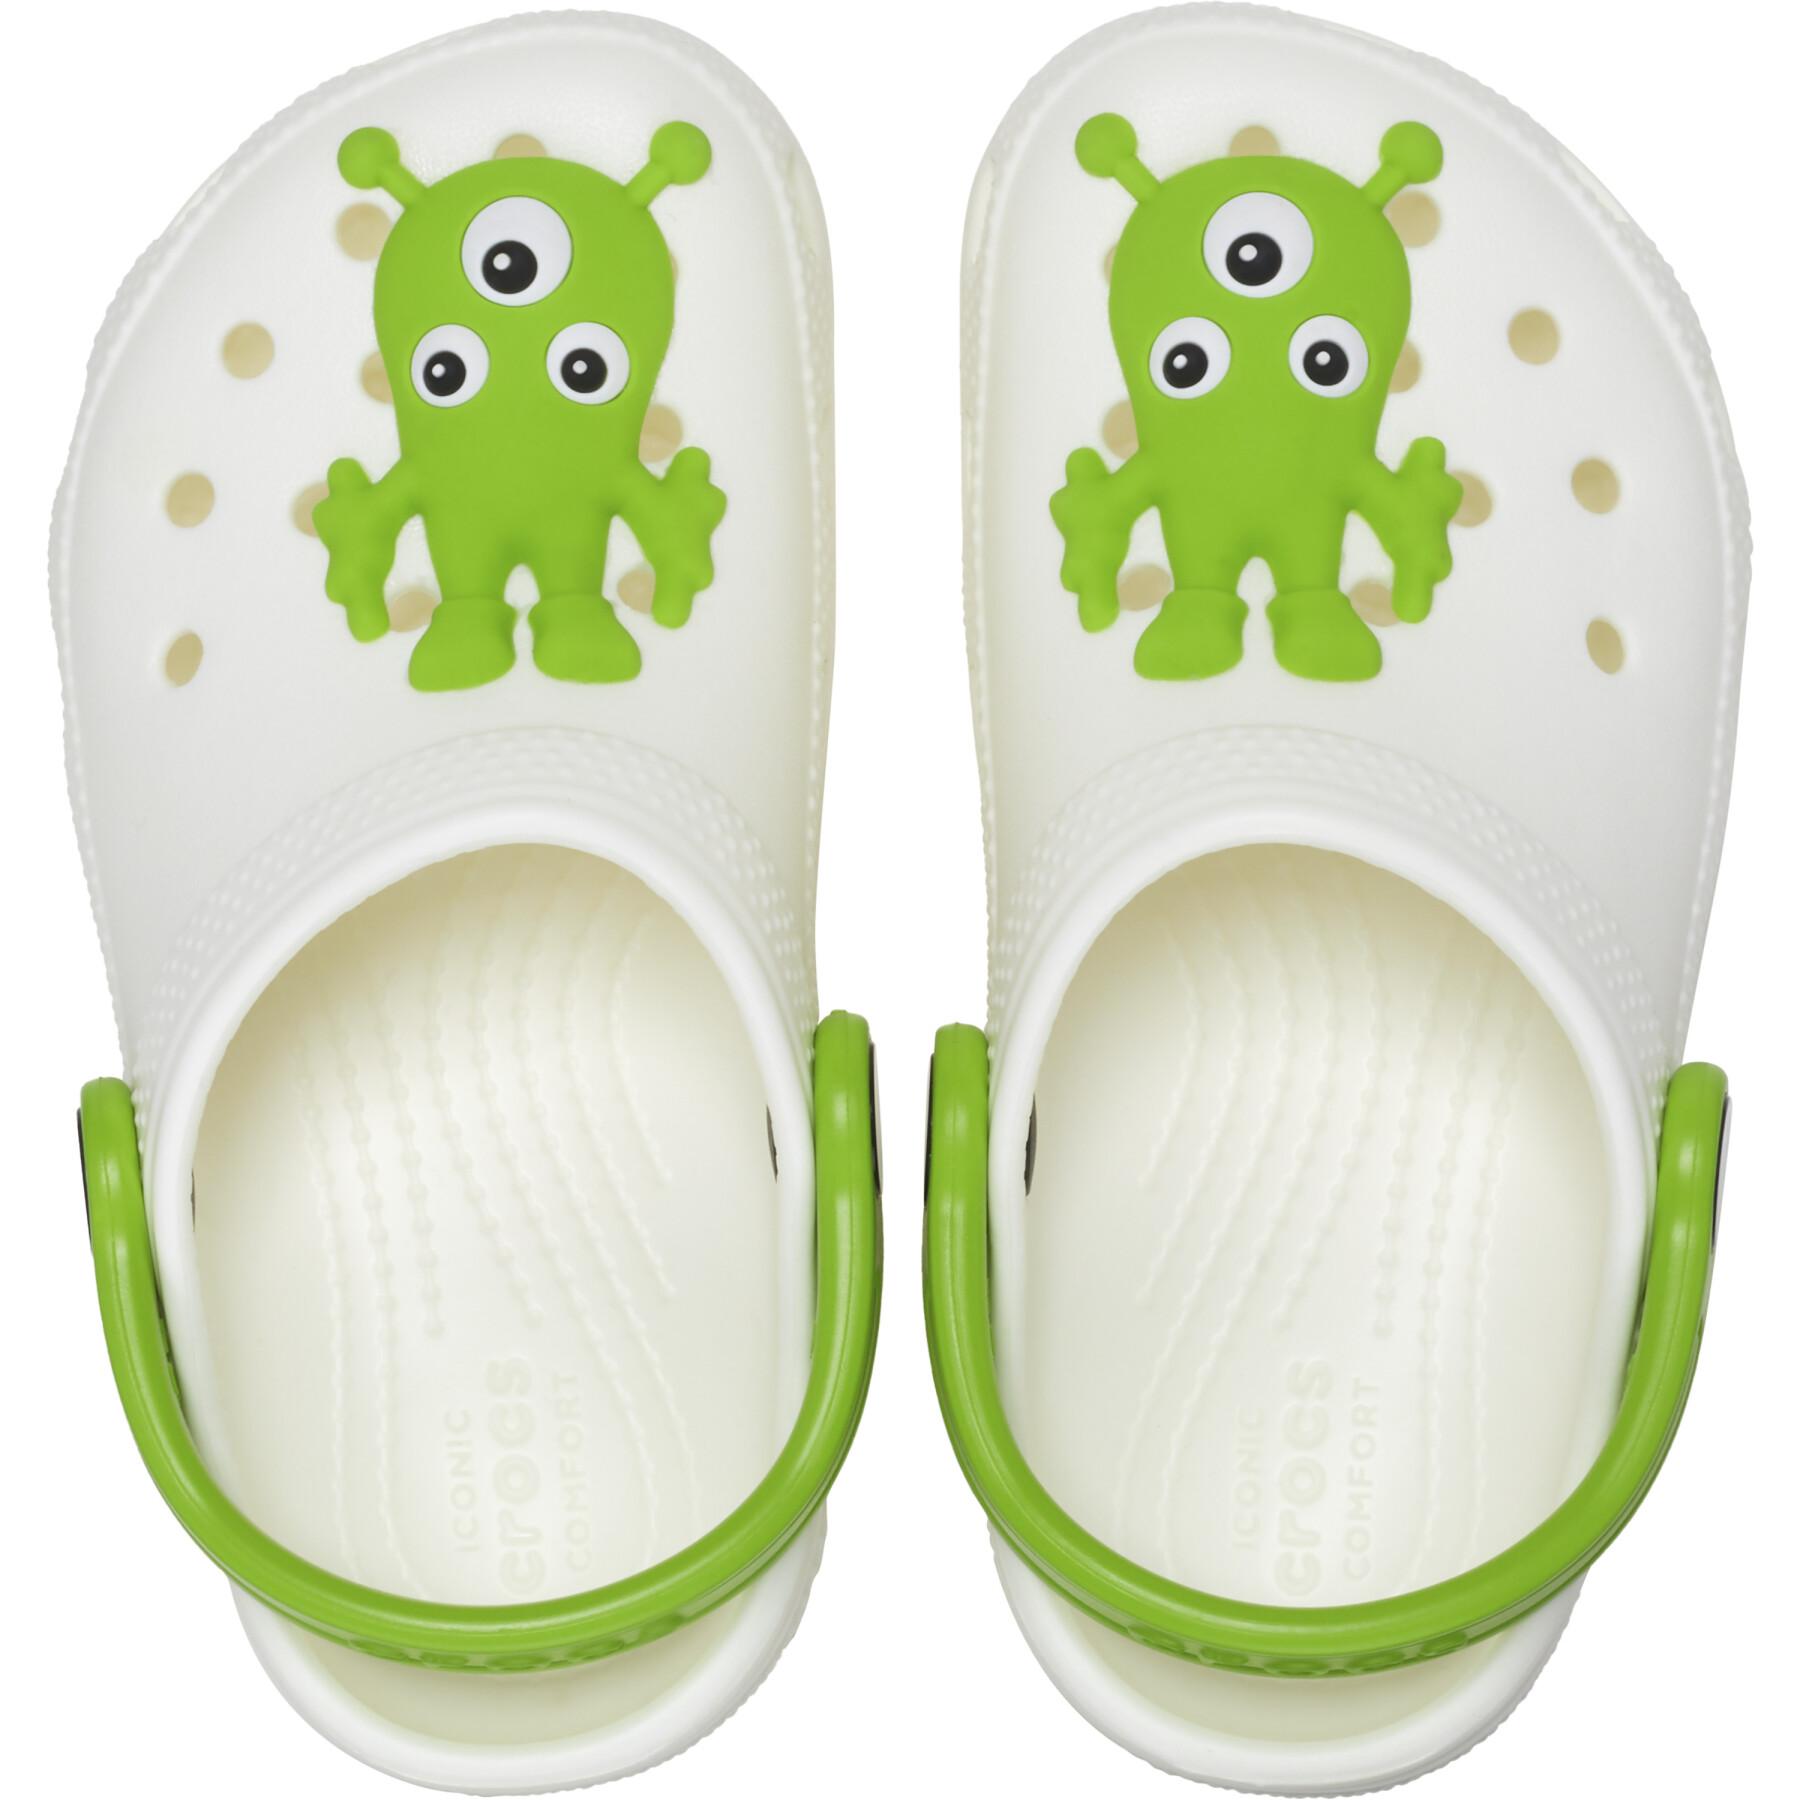 Baby clogs Crocs Classic Glow Alien